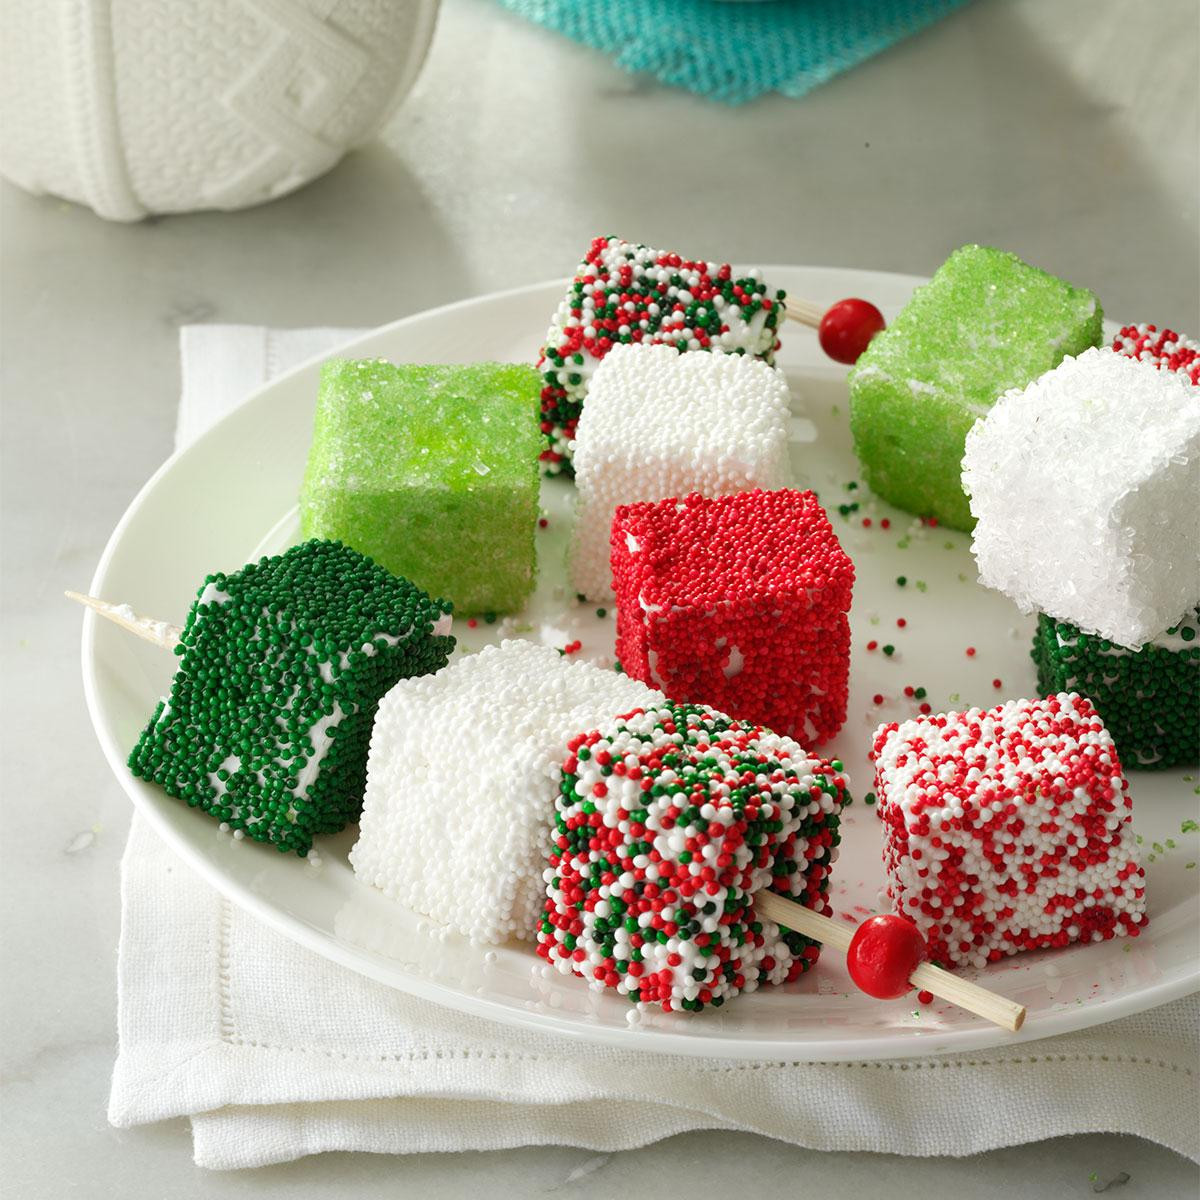 Taste Of Home Christmas Desserts
 Homemade Holiday Marshmallows Recipe